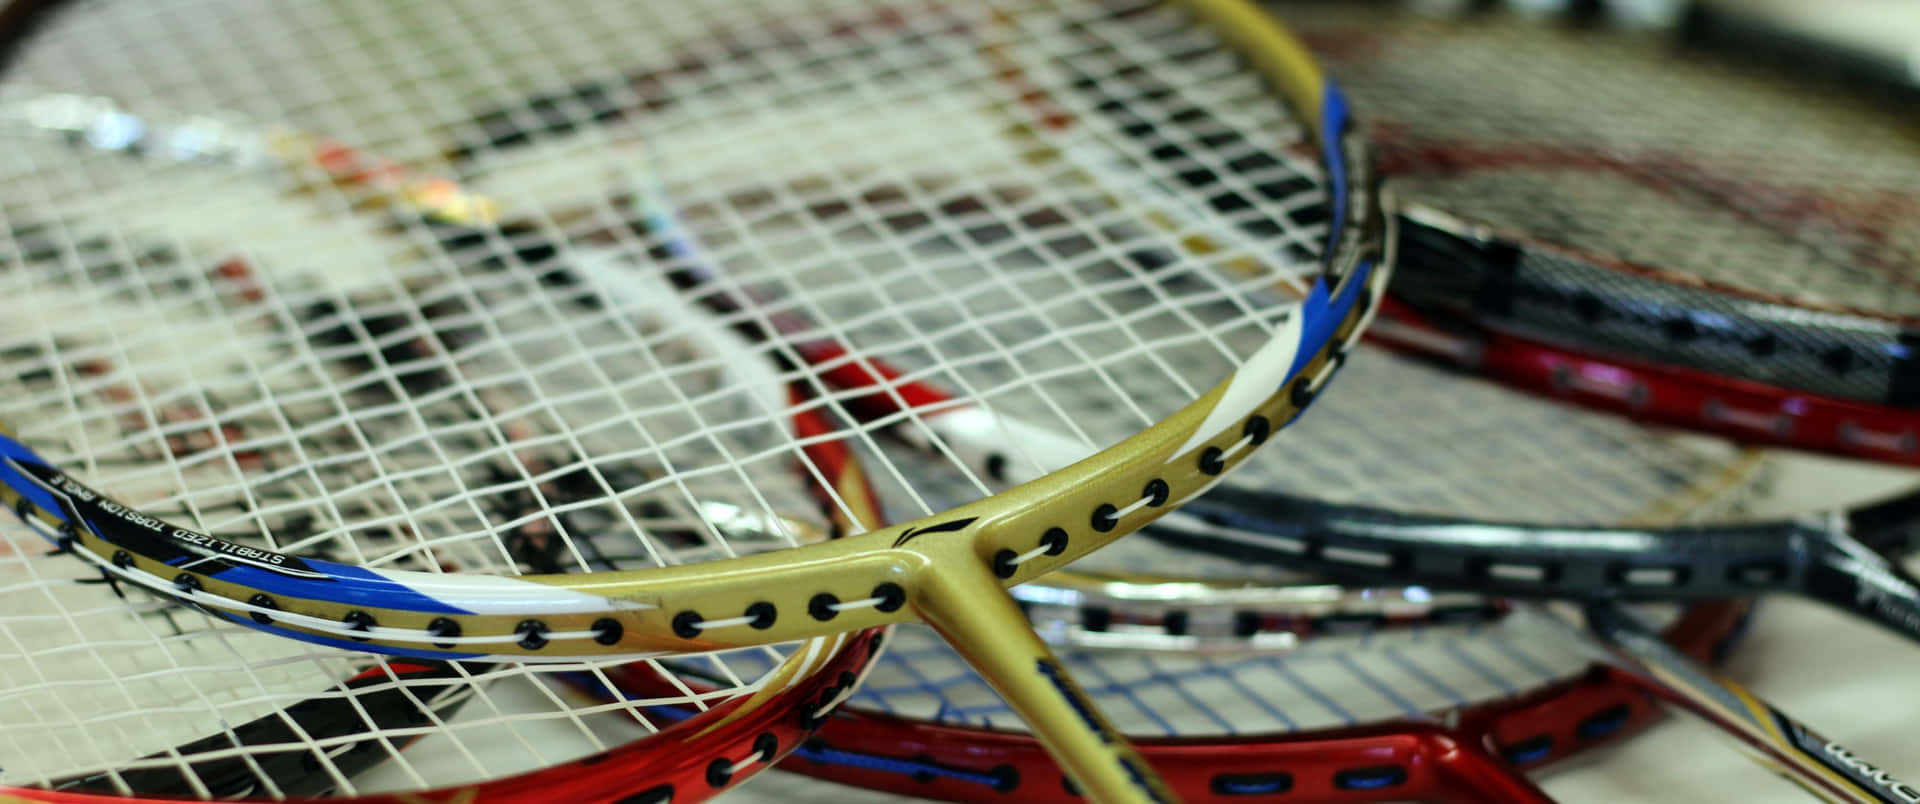 Badminton Match Intensity In High Resolution